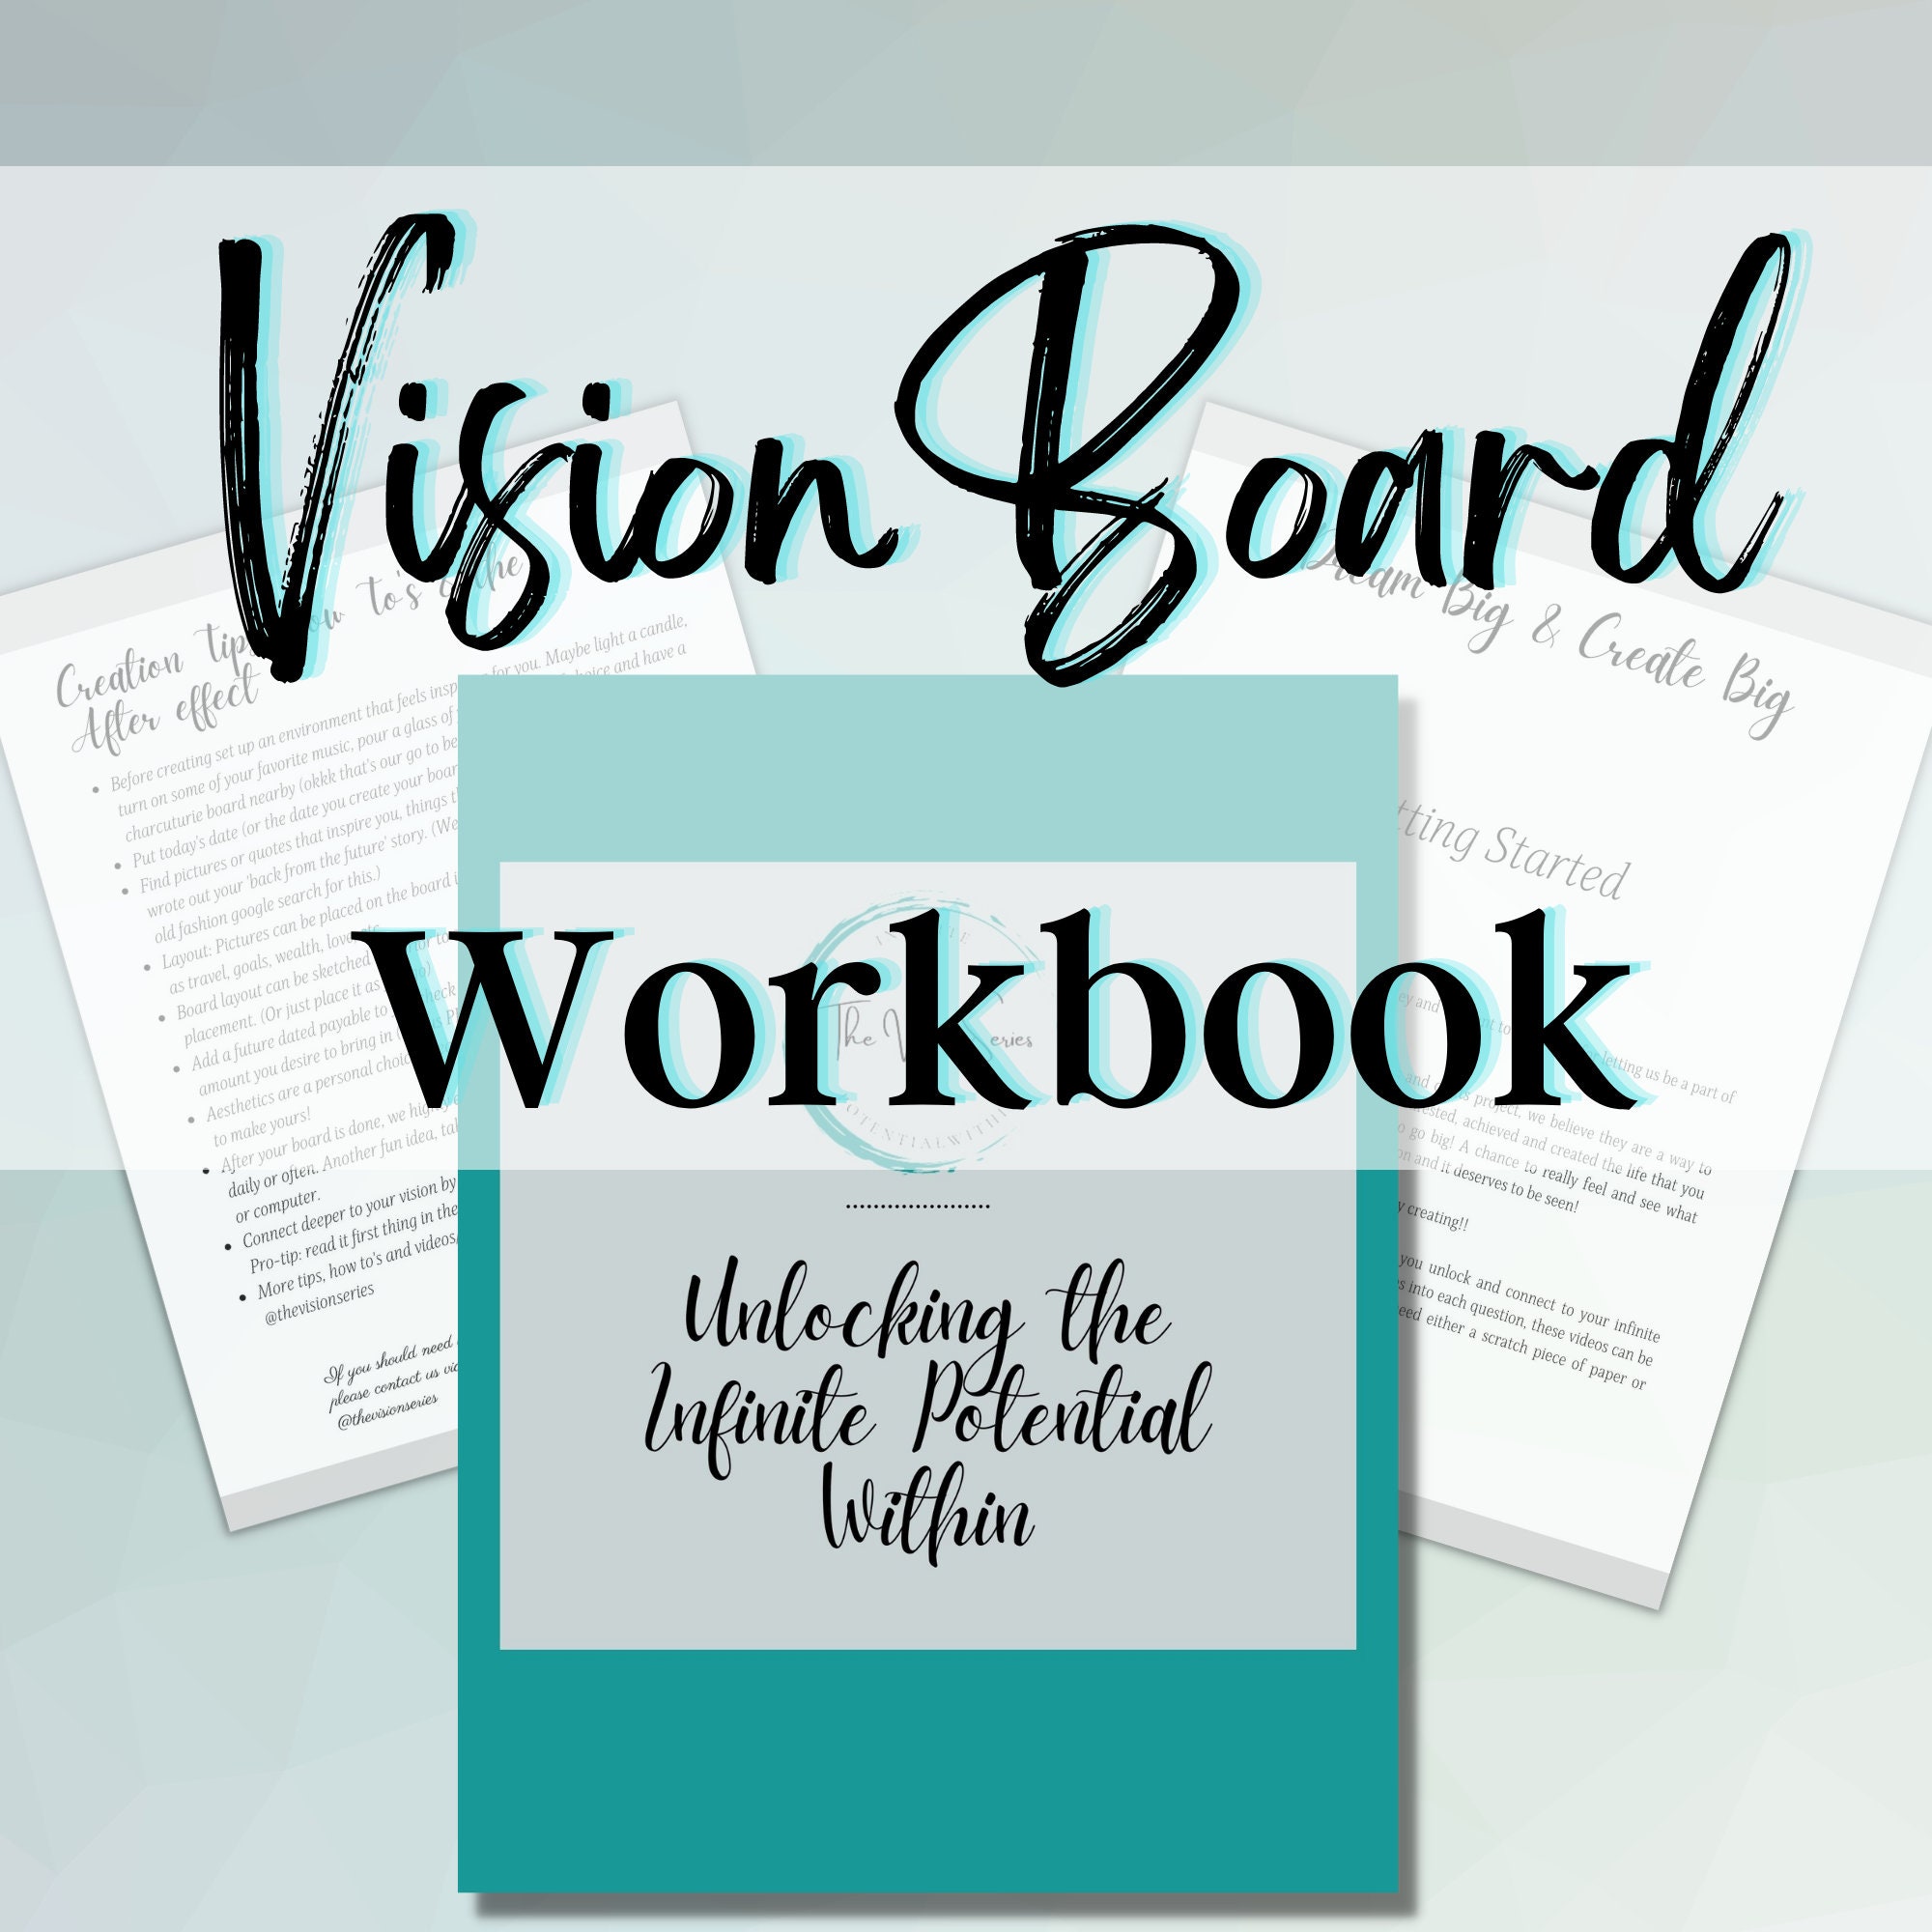 Minimalist Printable Vision Board Template,printable Dream Board